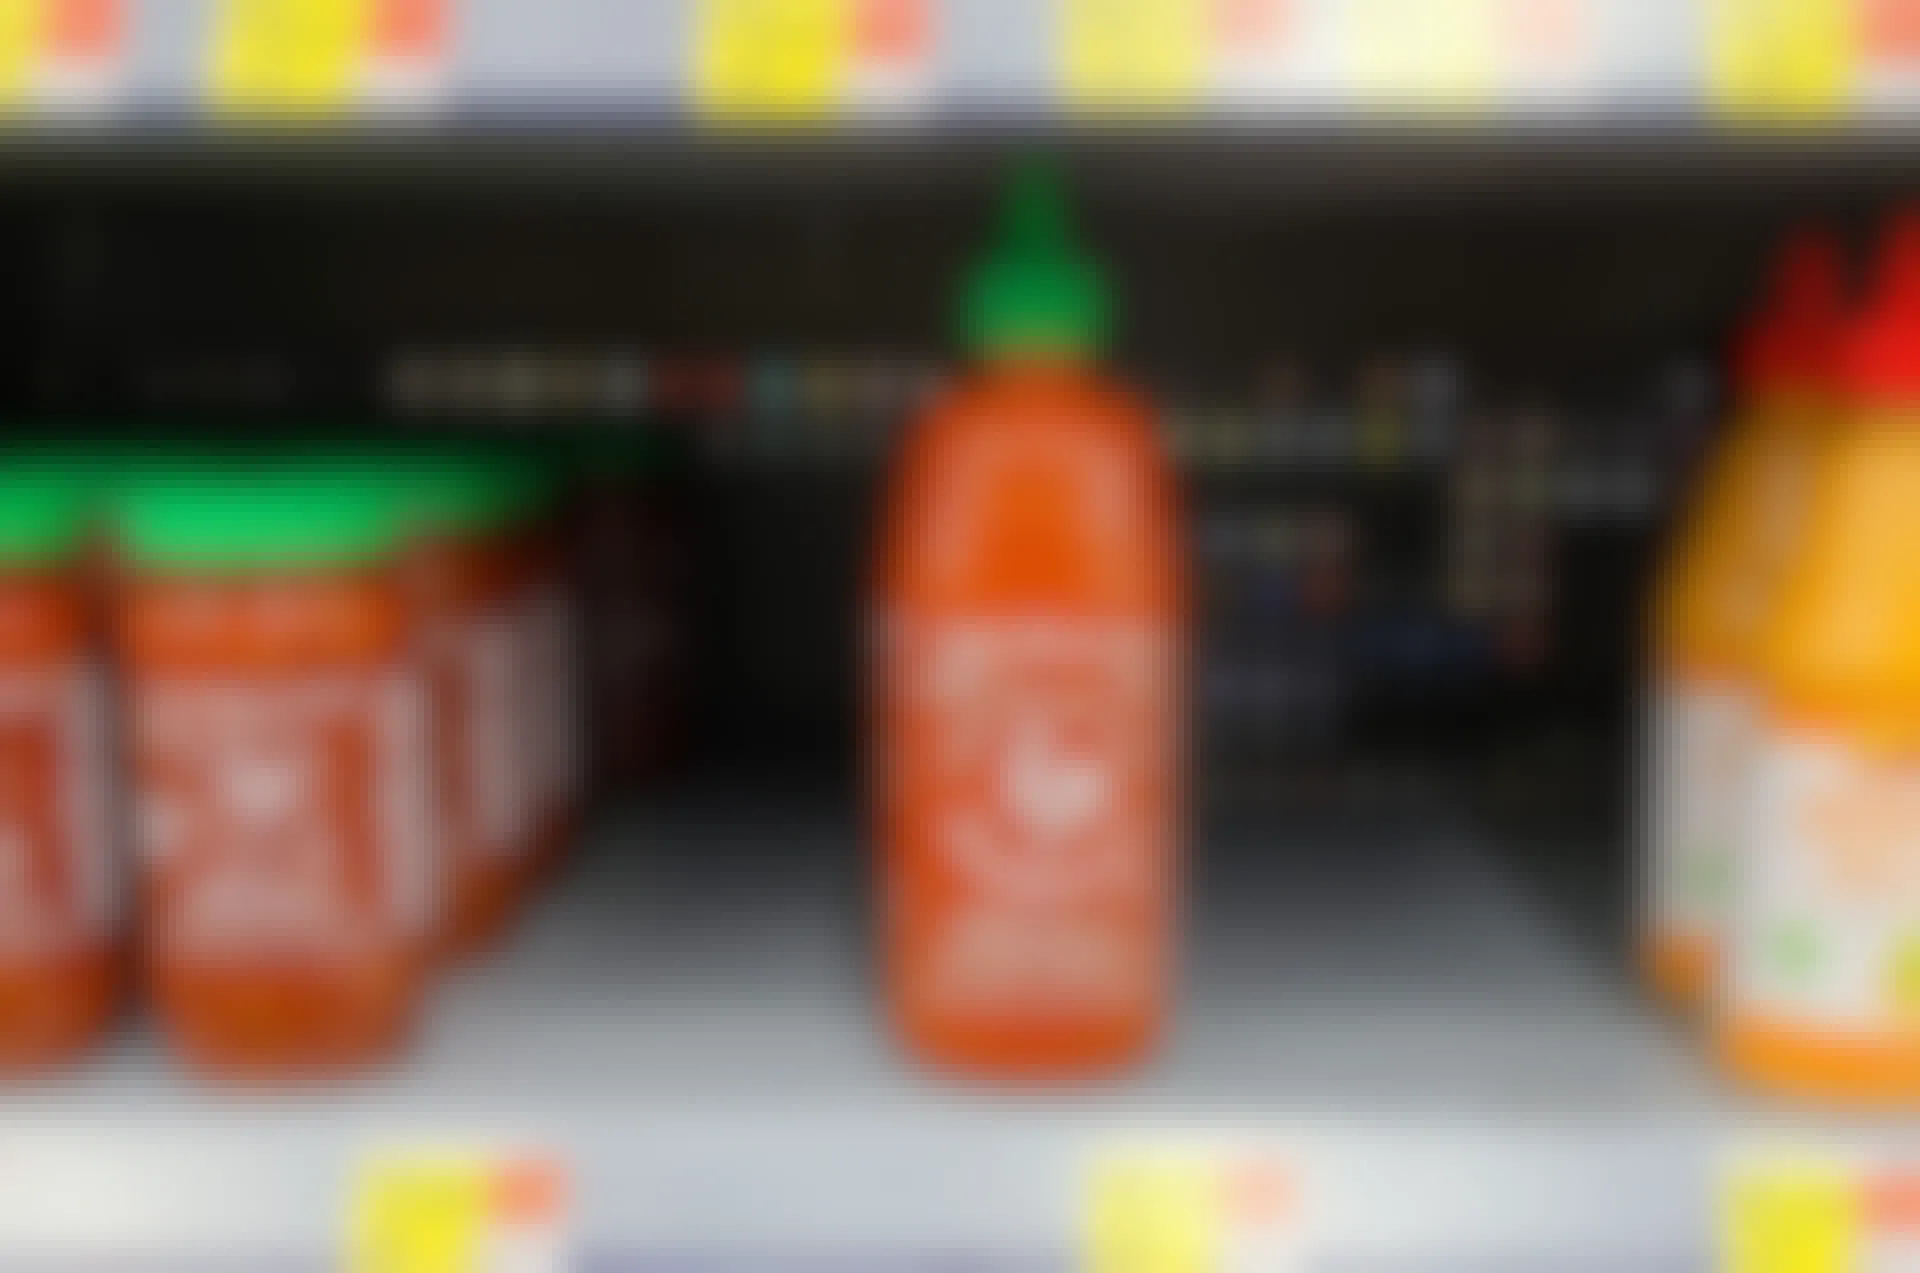 Single bottle of Sriracha hot sauce remains on the shelf at Walmart